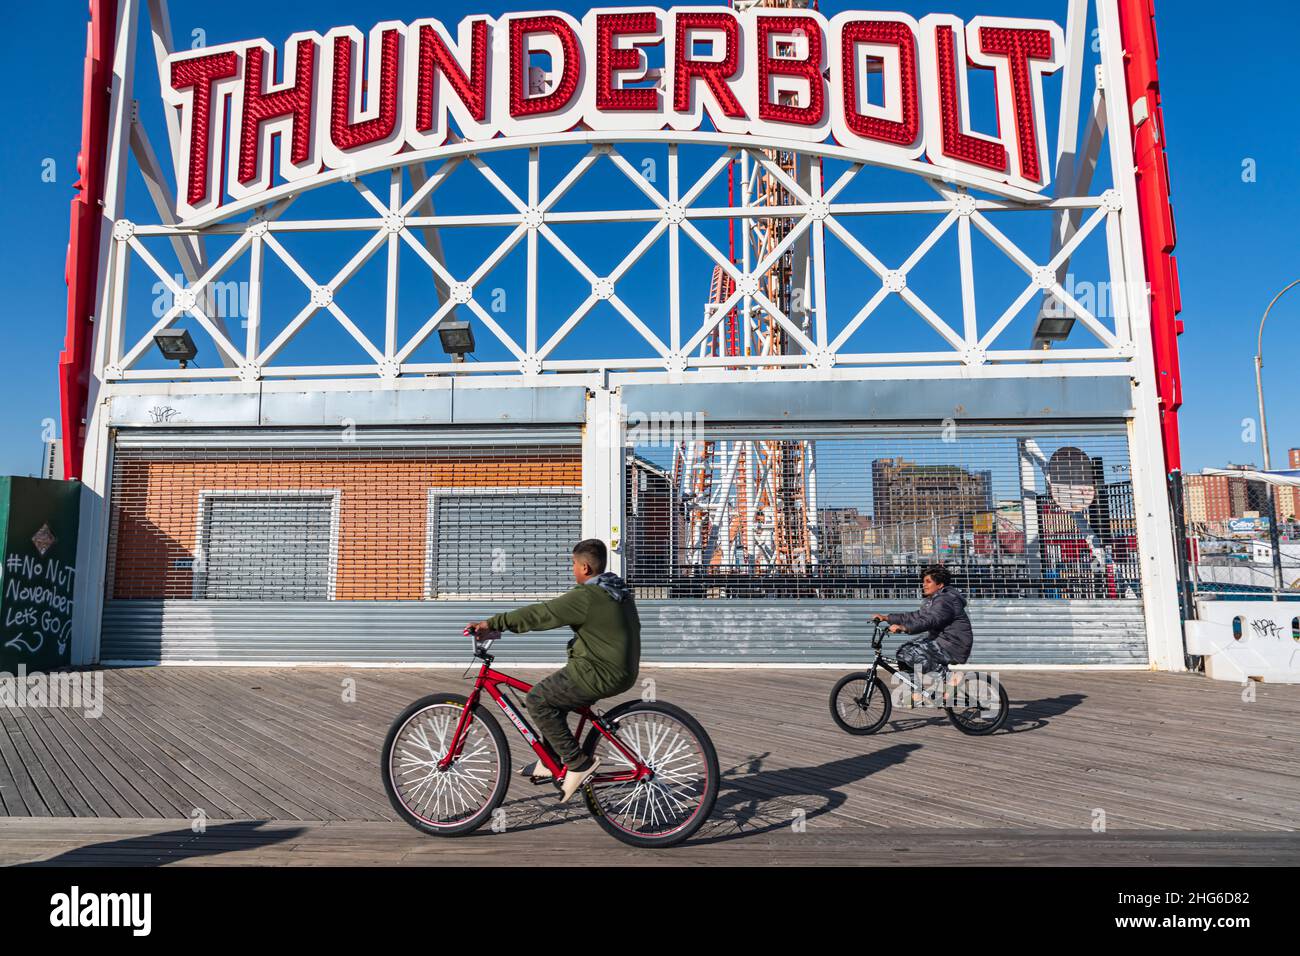 Coney Island, Brooklyn, New York City, New York, USA. November 6, 2021. Boys on bikes in front of the Thunderbolt ride at Coney Island. Stock Photo